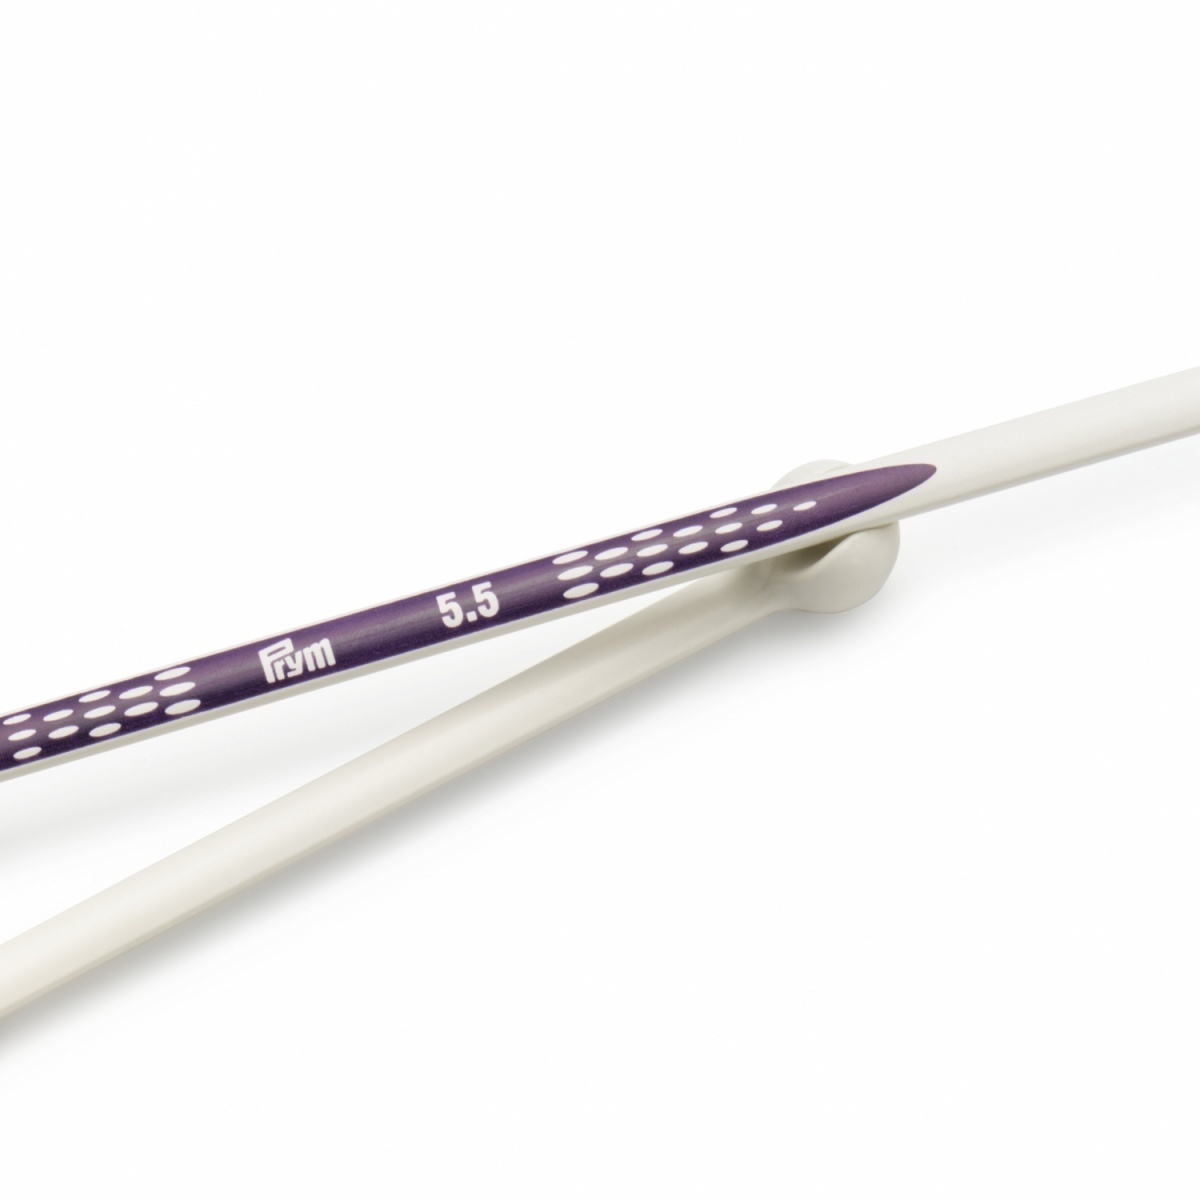 Single-pointed knitting needles, Ergonomic, 5,5mm фото 3